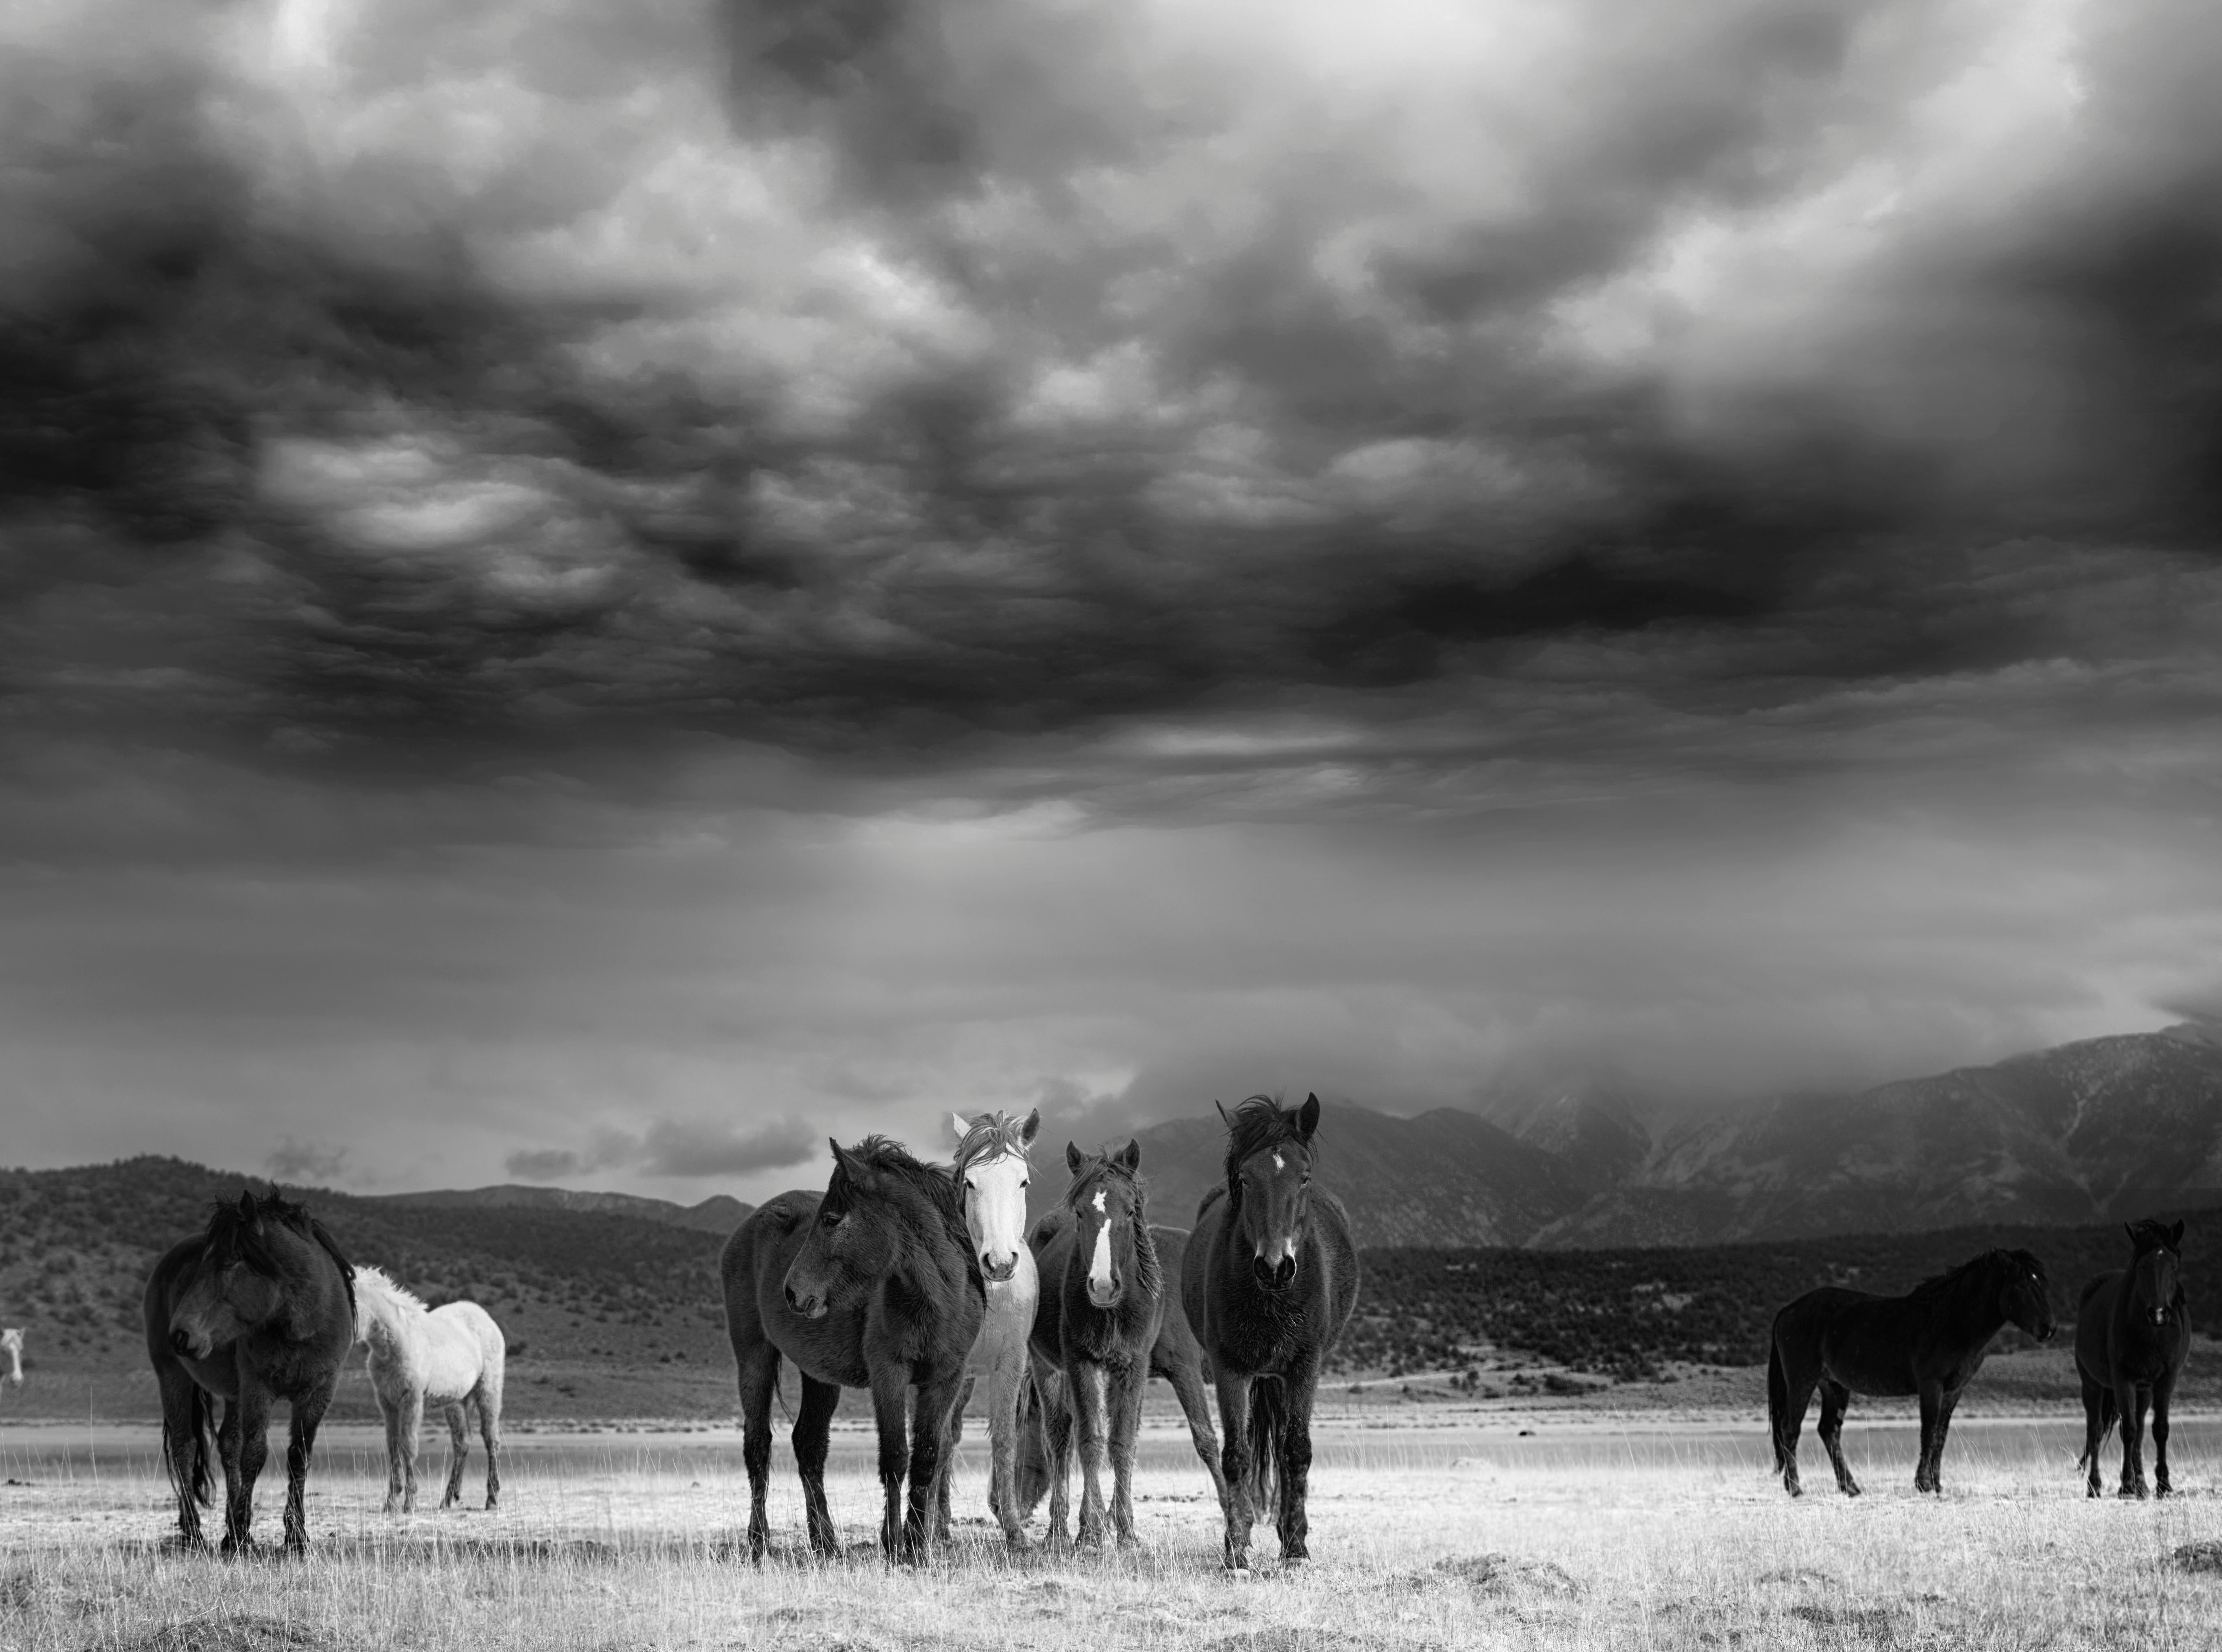 Shane Russeck Animal Print - Fine Art Photography of Wild Horses "The Calm" 40x60 Mustangs Photograph Art